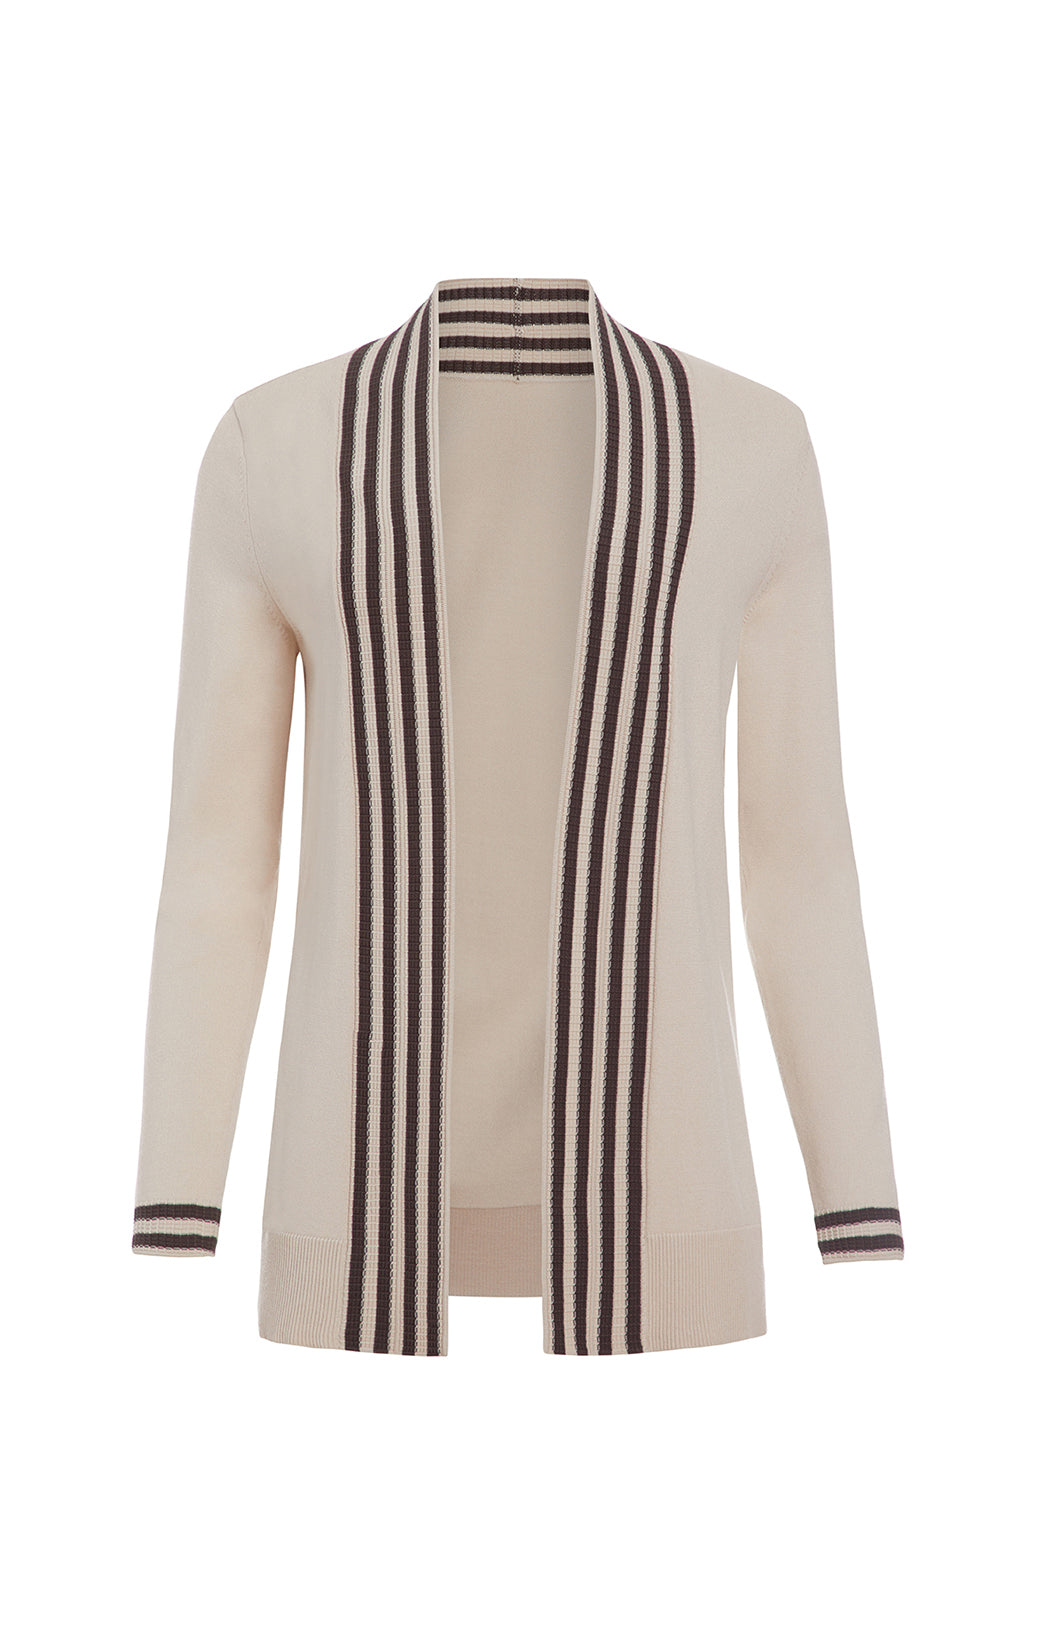 Gazelle - Rib-striped Knit Skirt - Product Image